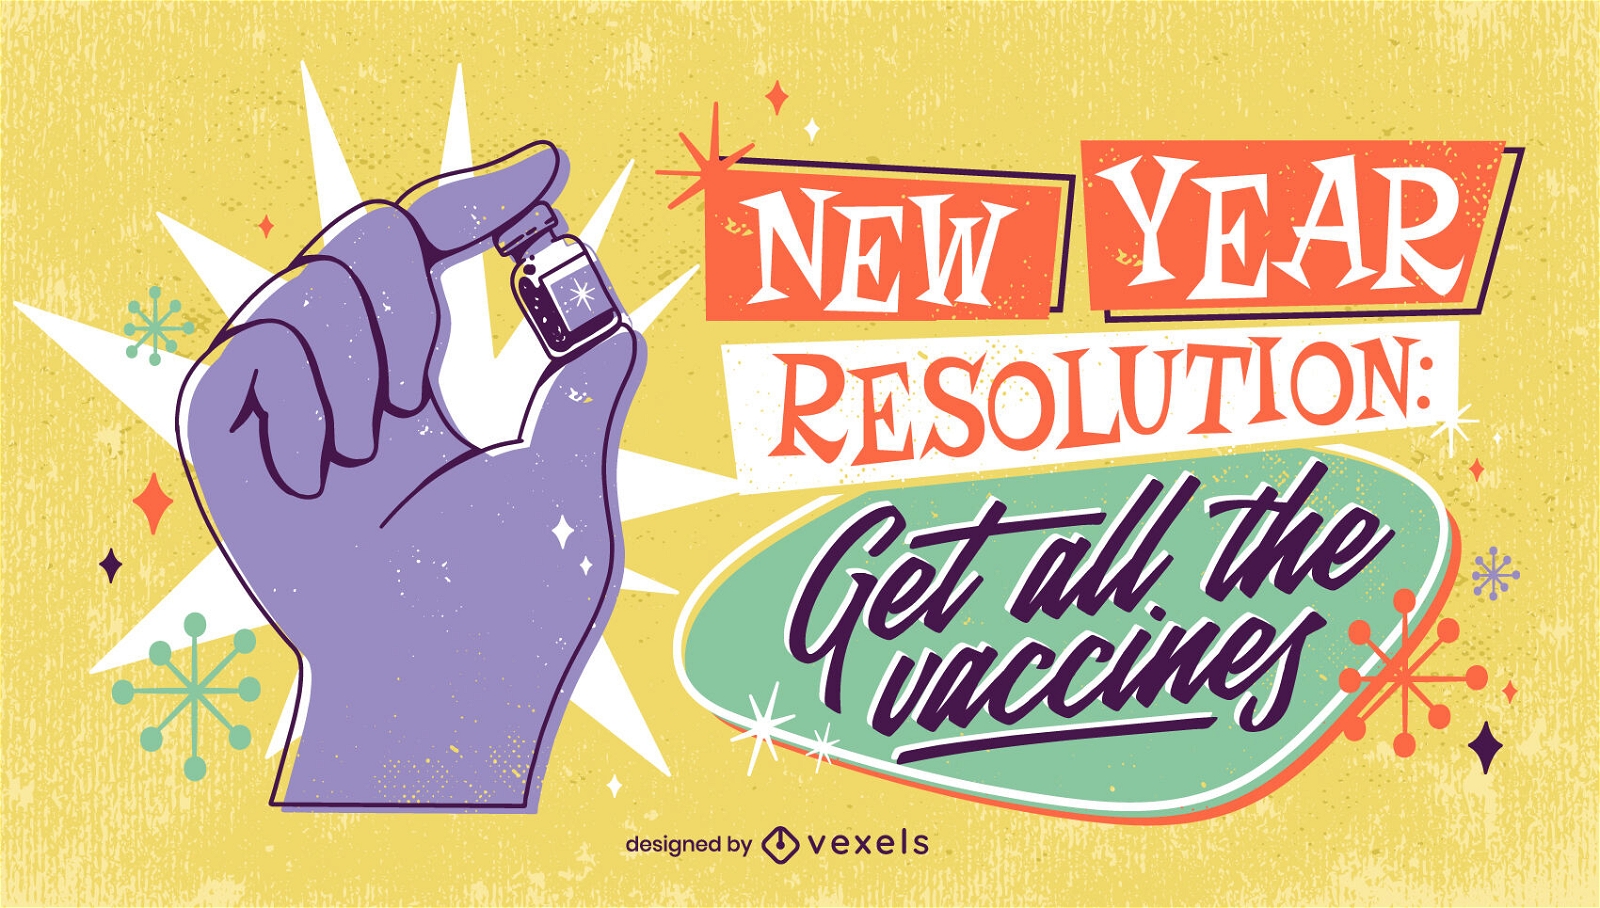 Impfstoff-Neujahrszitat-Illustrationsdesign